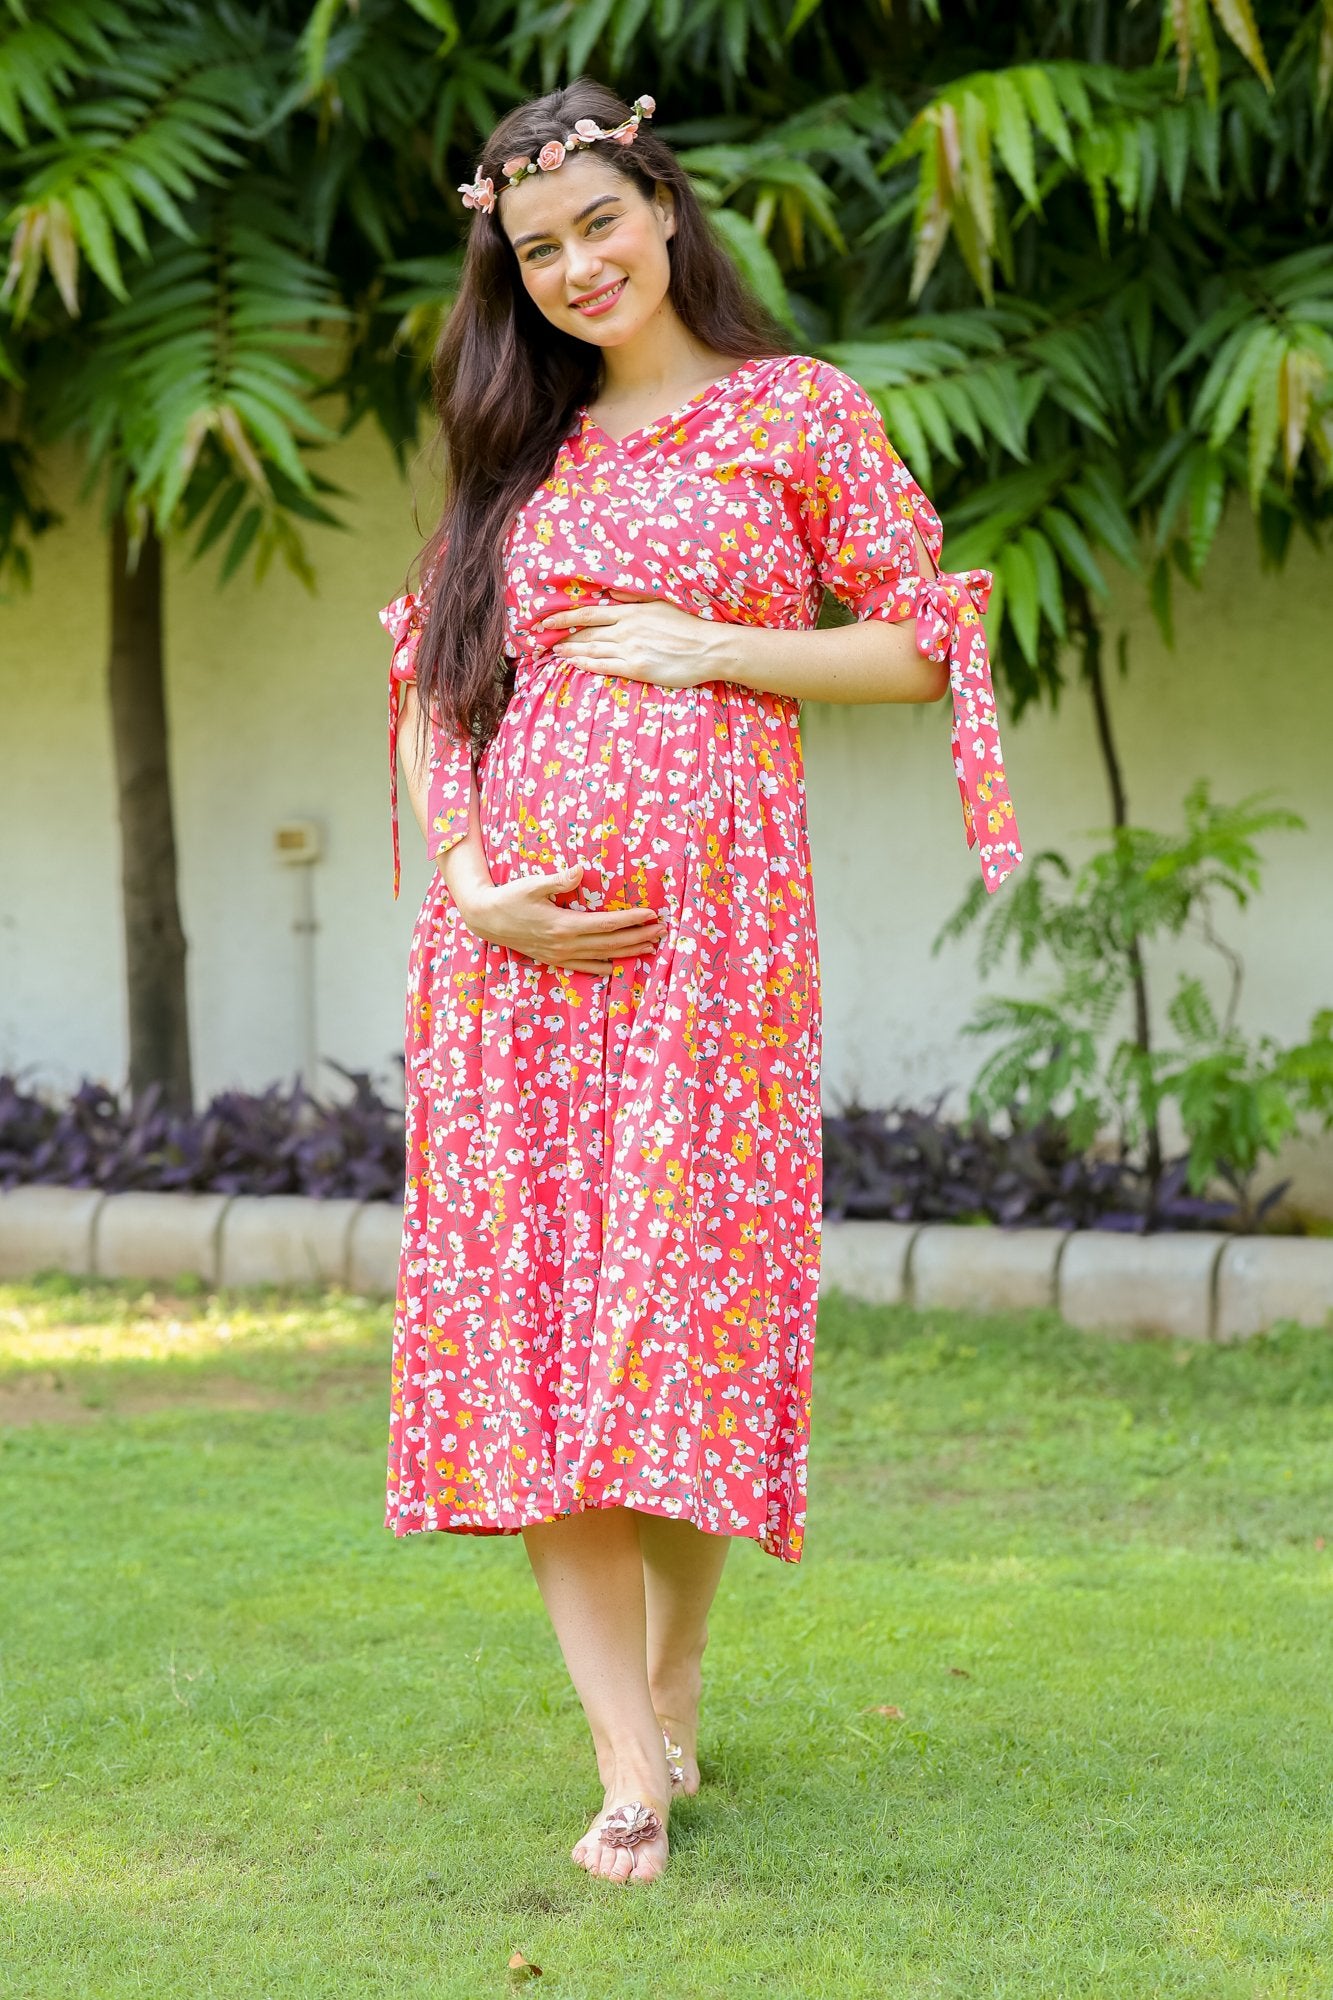 Buy Women Maternity Dress Online | Pregnancy Dresses